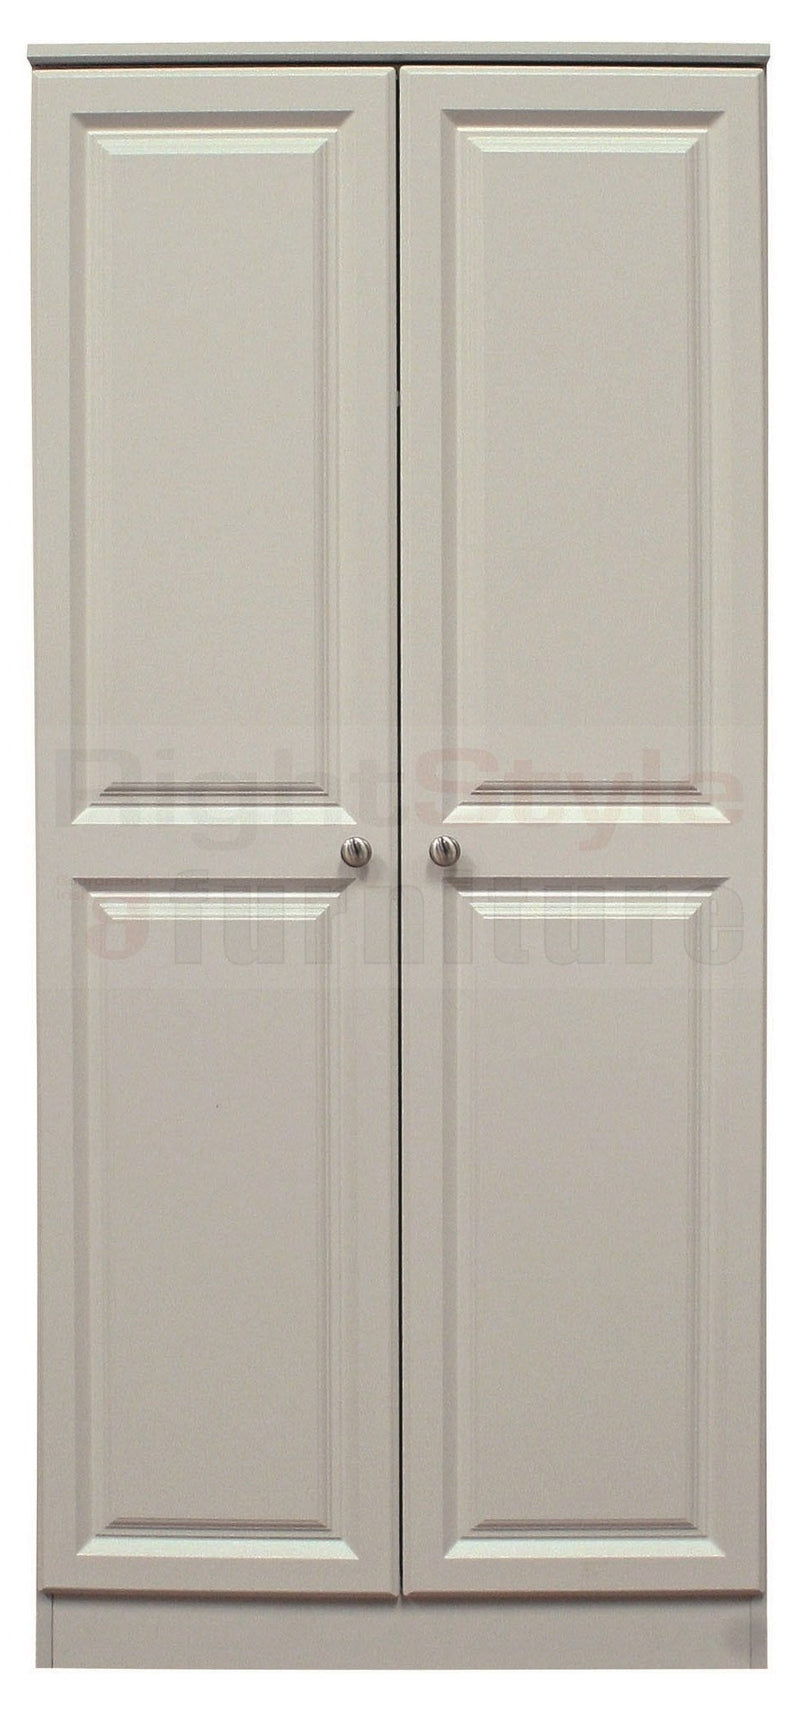 Greystones 2 Door Robe with Shelves and Mirror